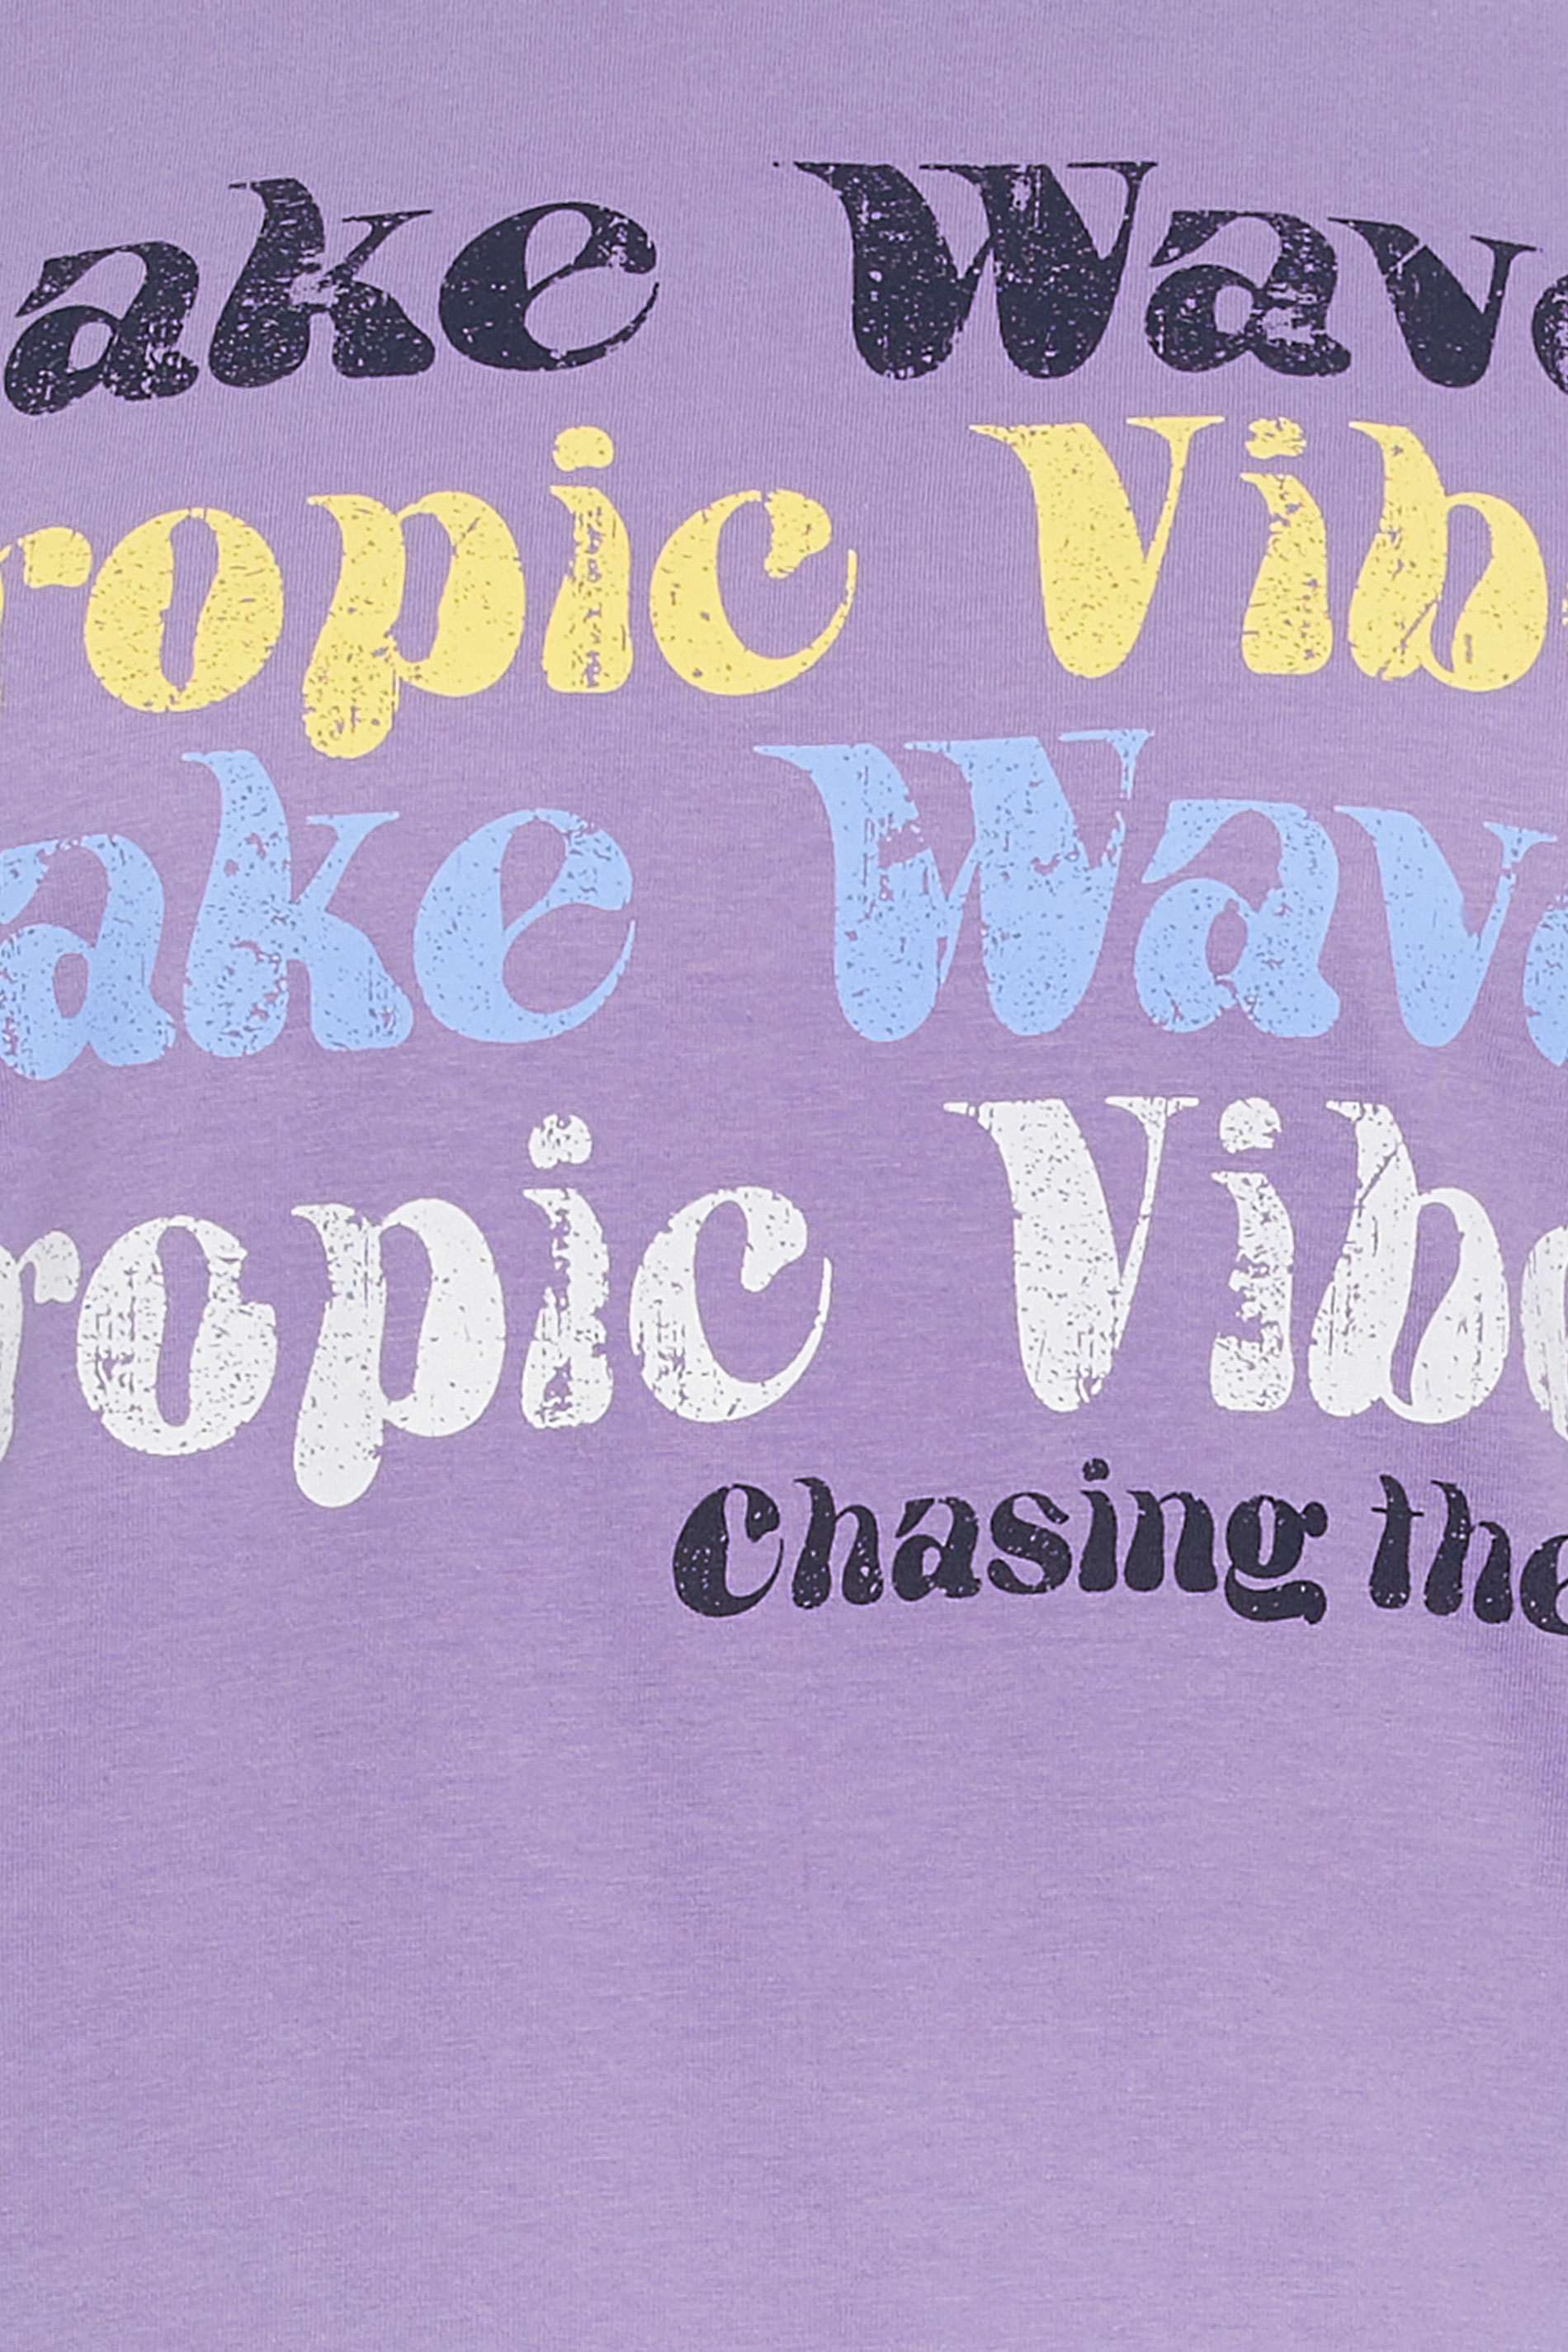 BadRhino Big & Tall Purple 'Make Waves' Slogan T-Shirt | BadRhino 3